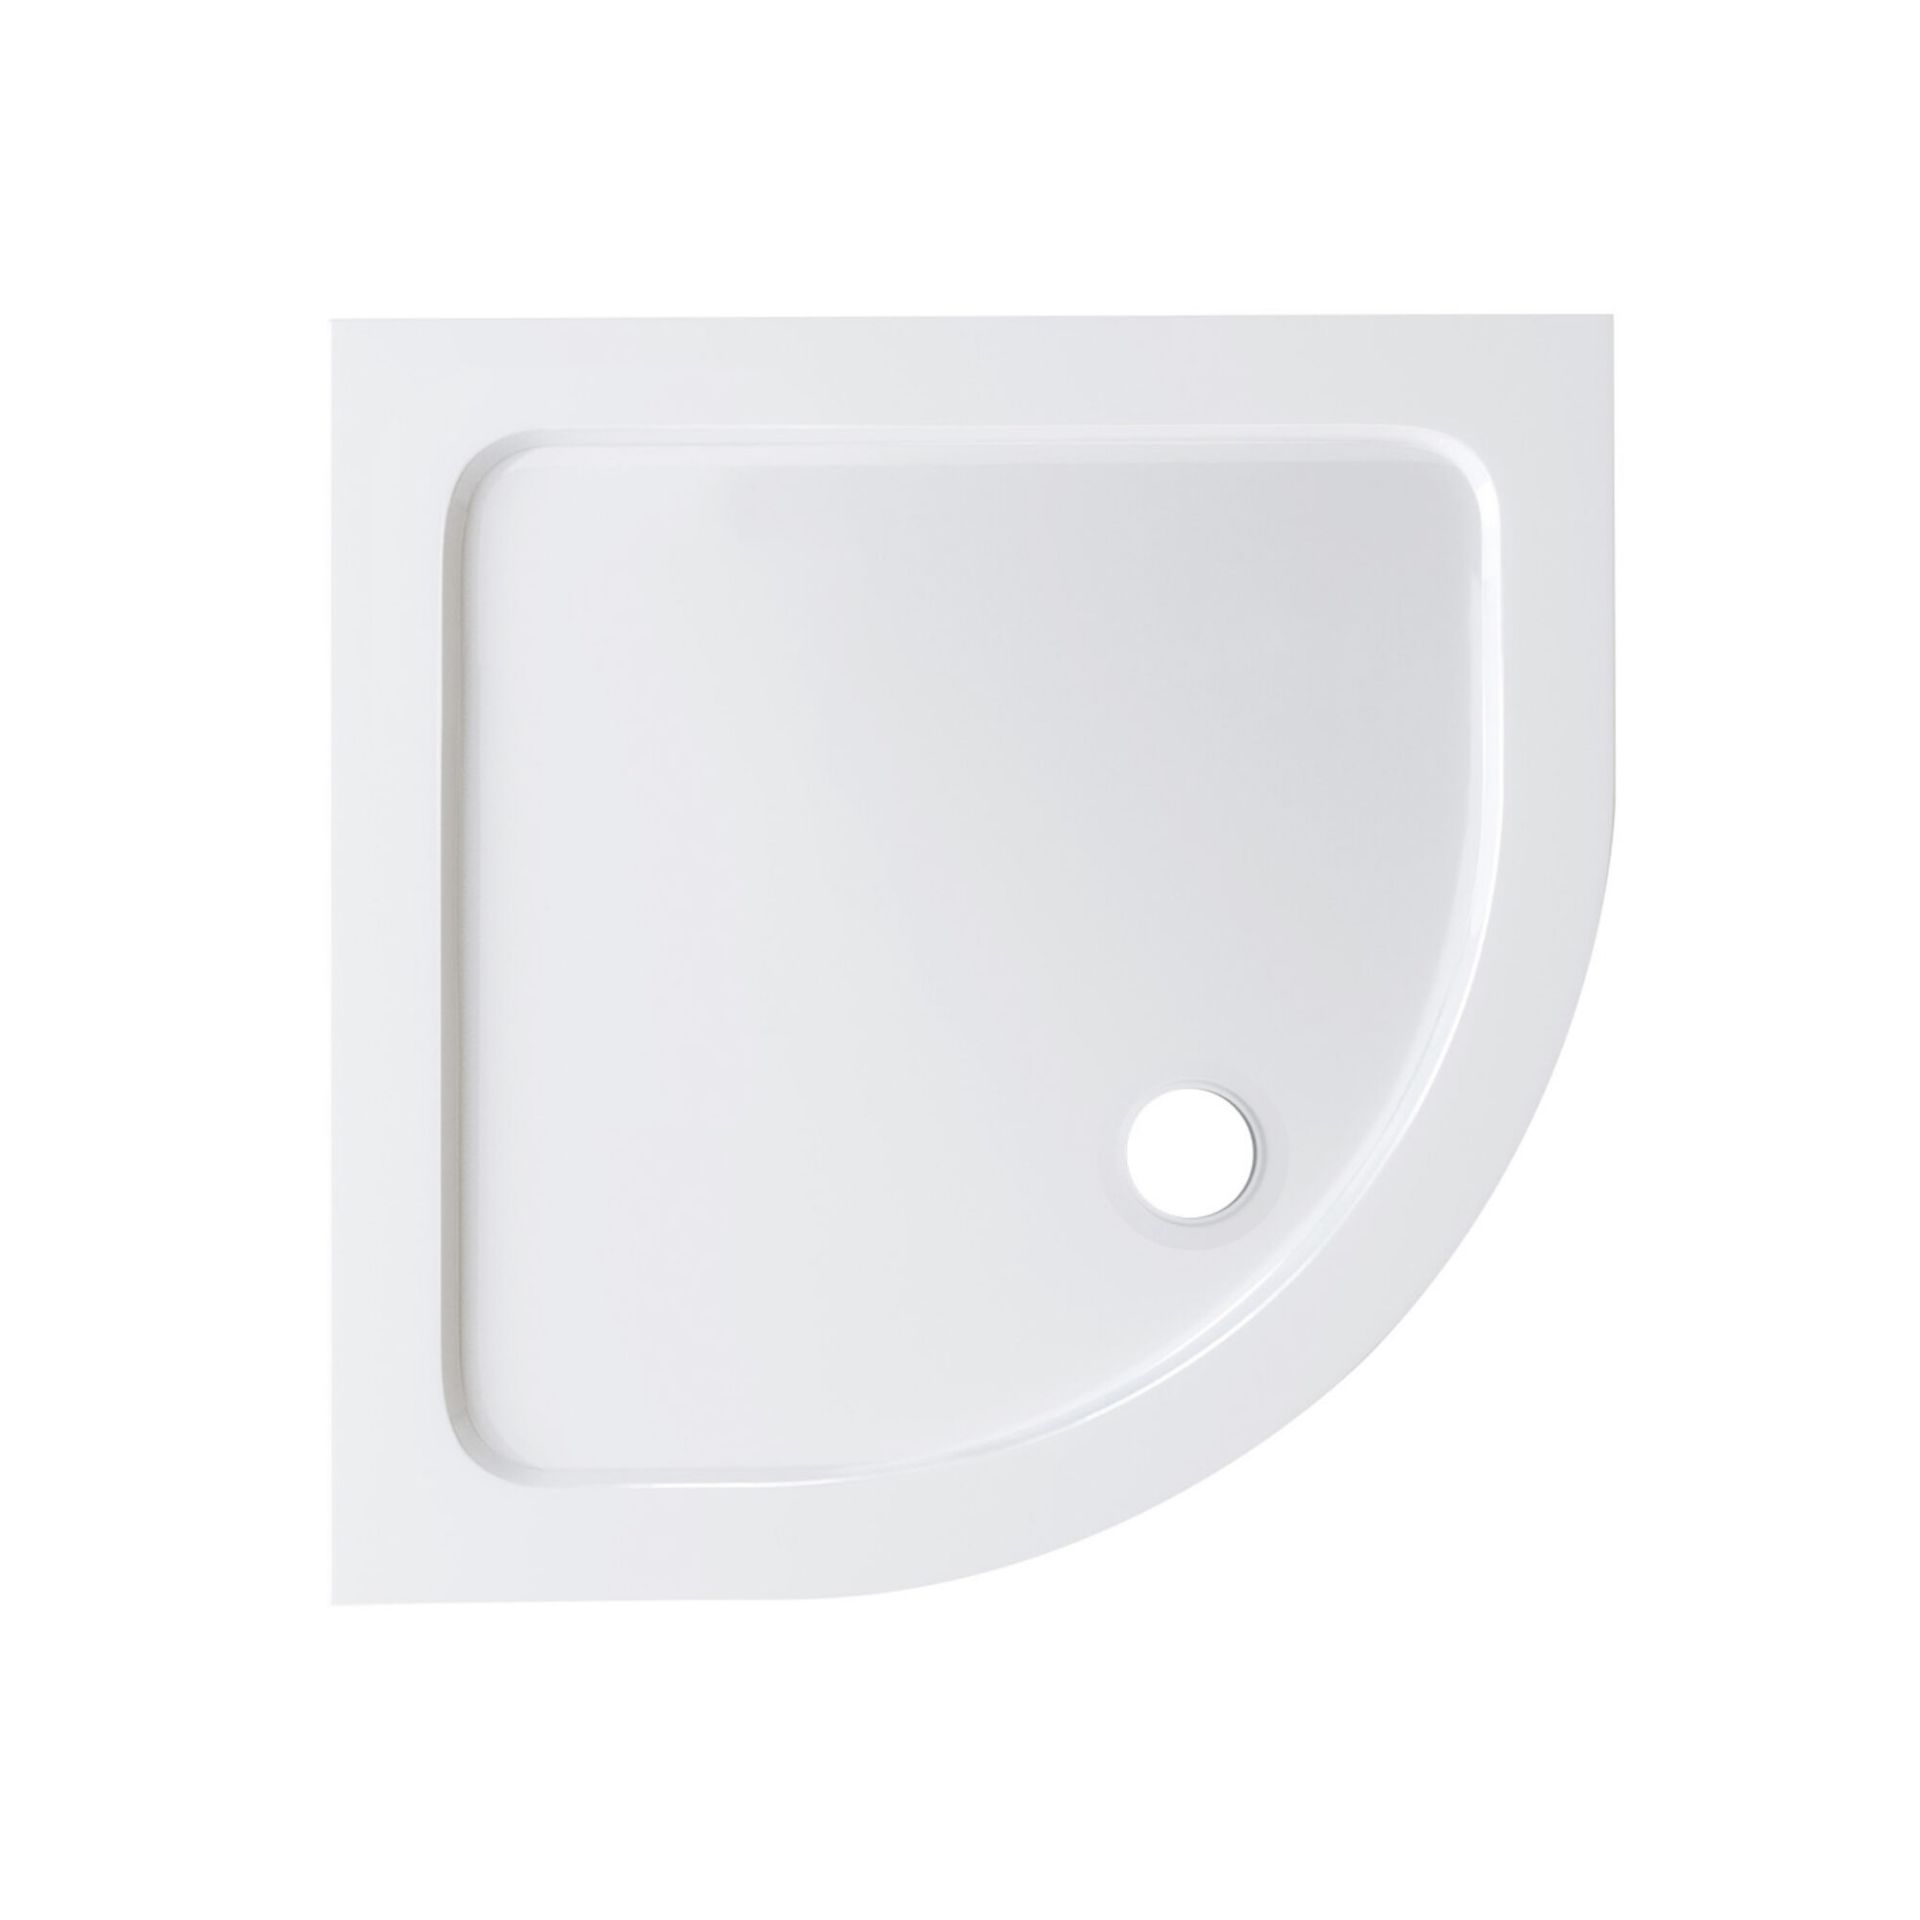 (MQ45) 900x900mm Quadrant Ultra Slim Stone Shower Tray. Low profile ultra slim design Gel coa...